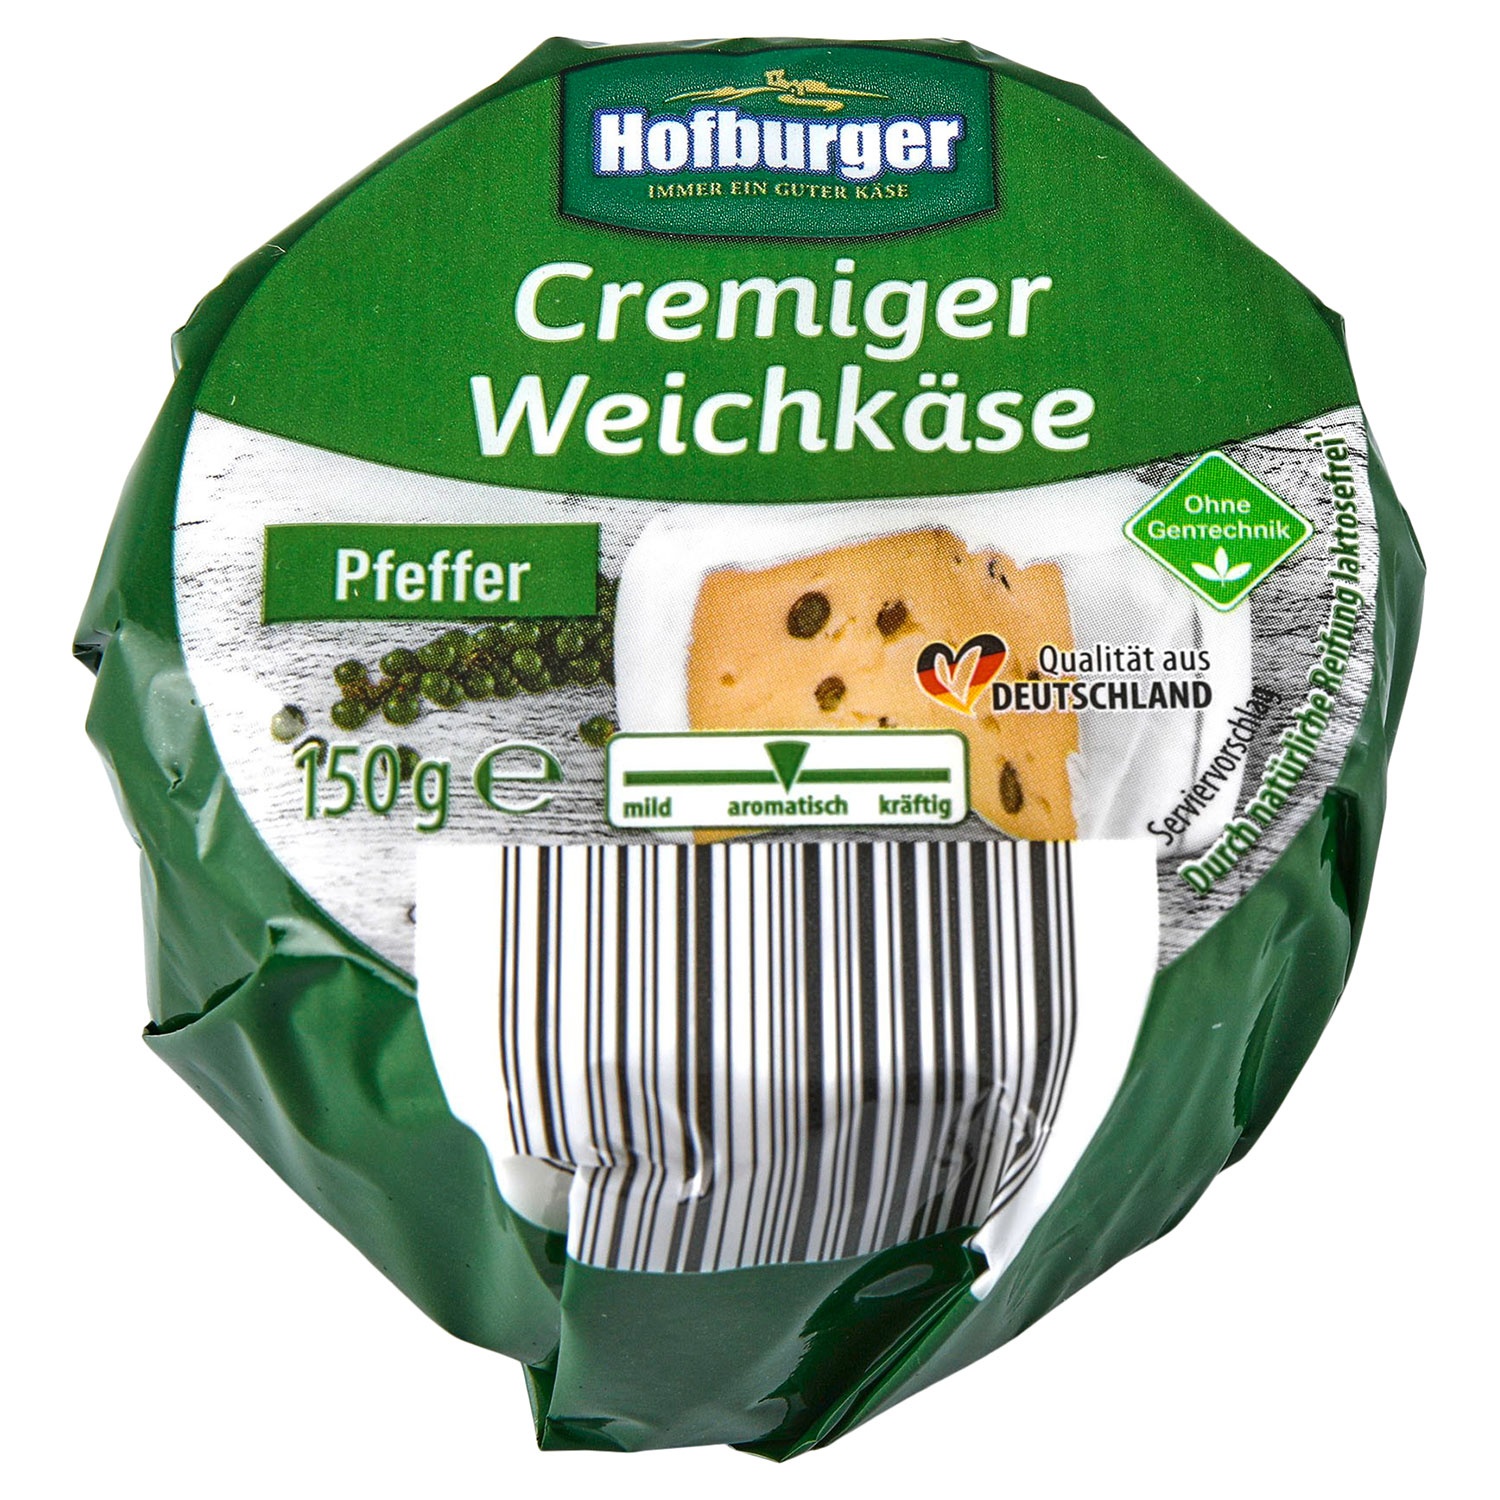 HOFBURGER Cremiger Weichkäse 150 g